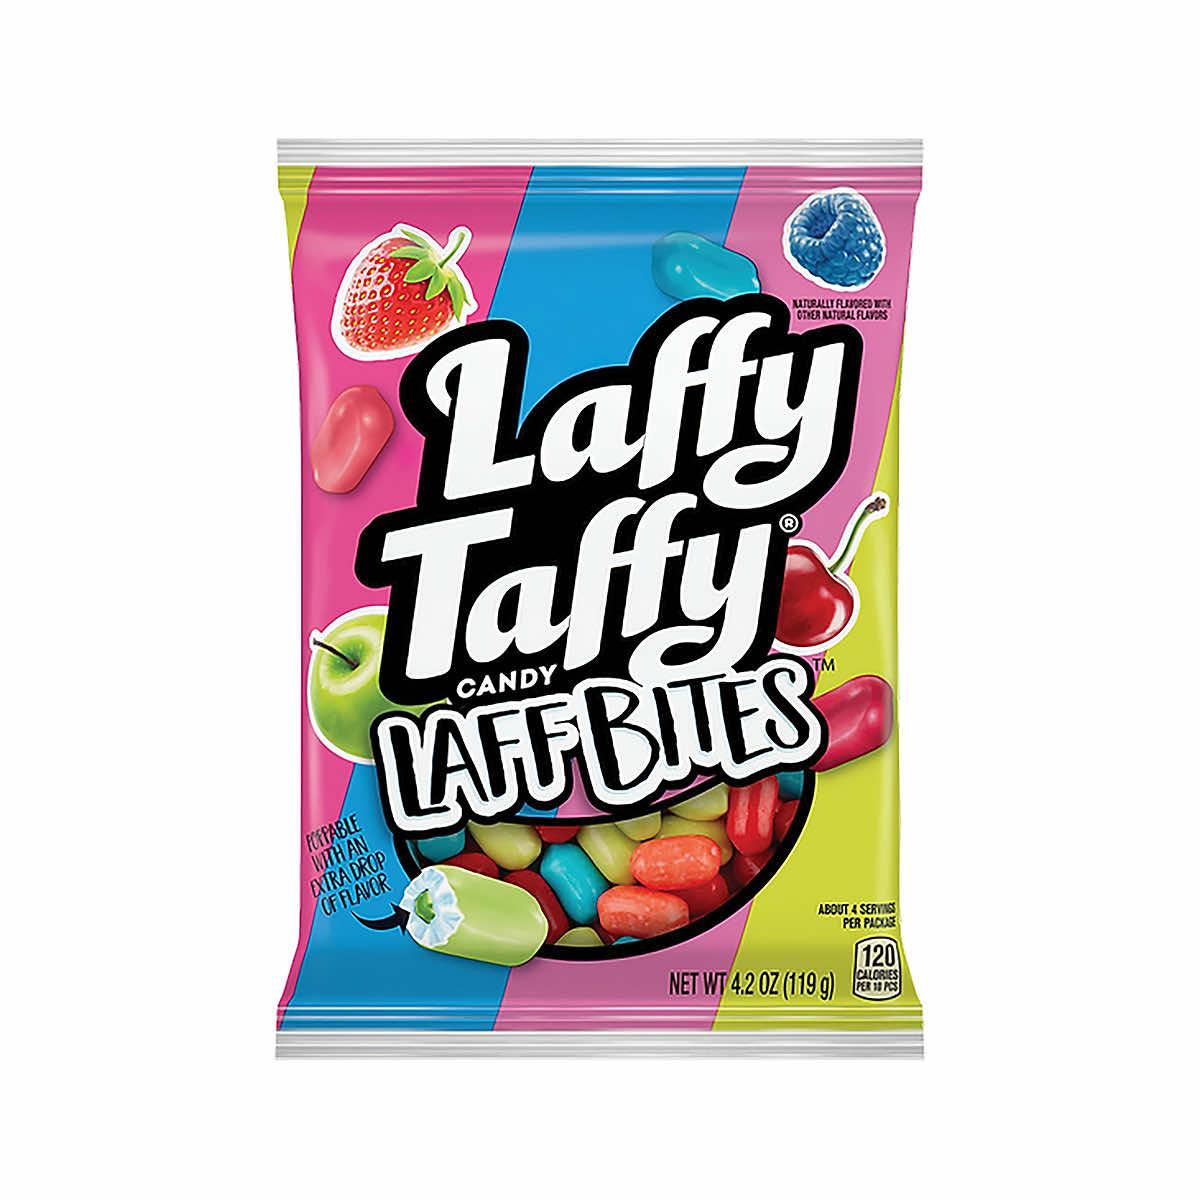  Laffy Taffy Bites Candy